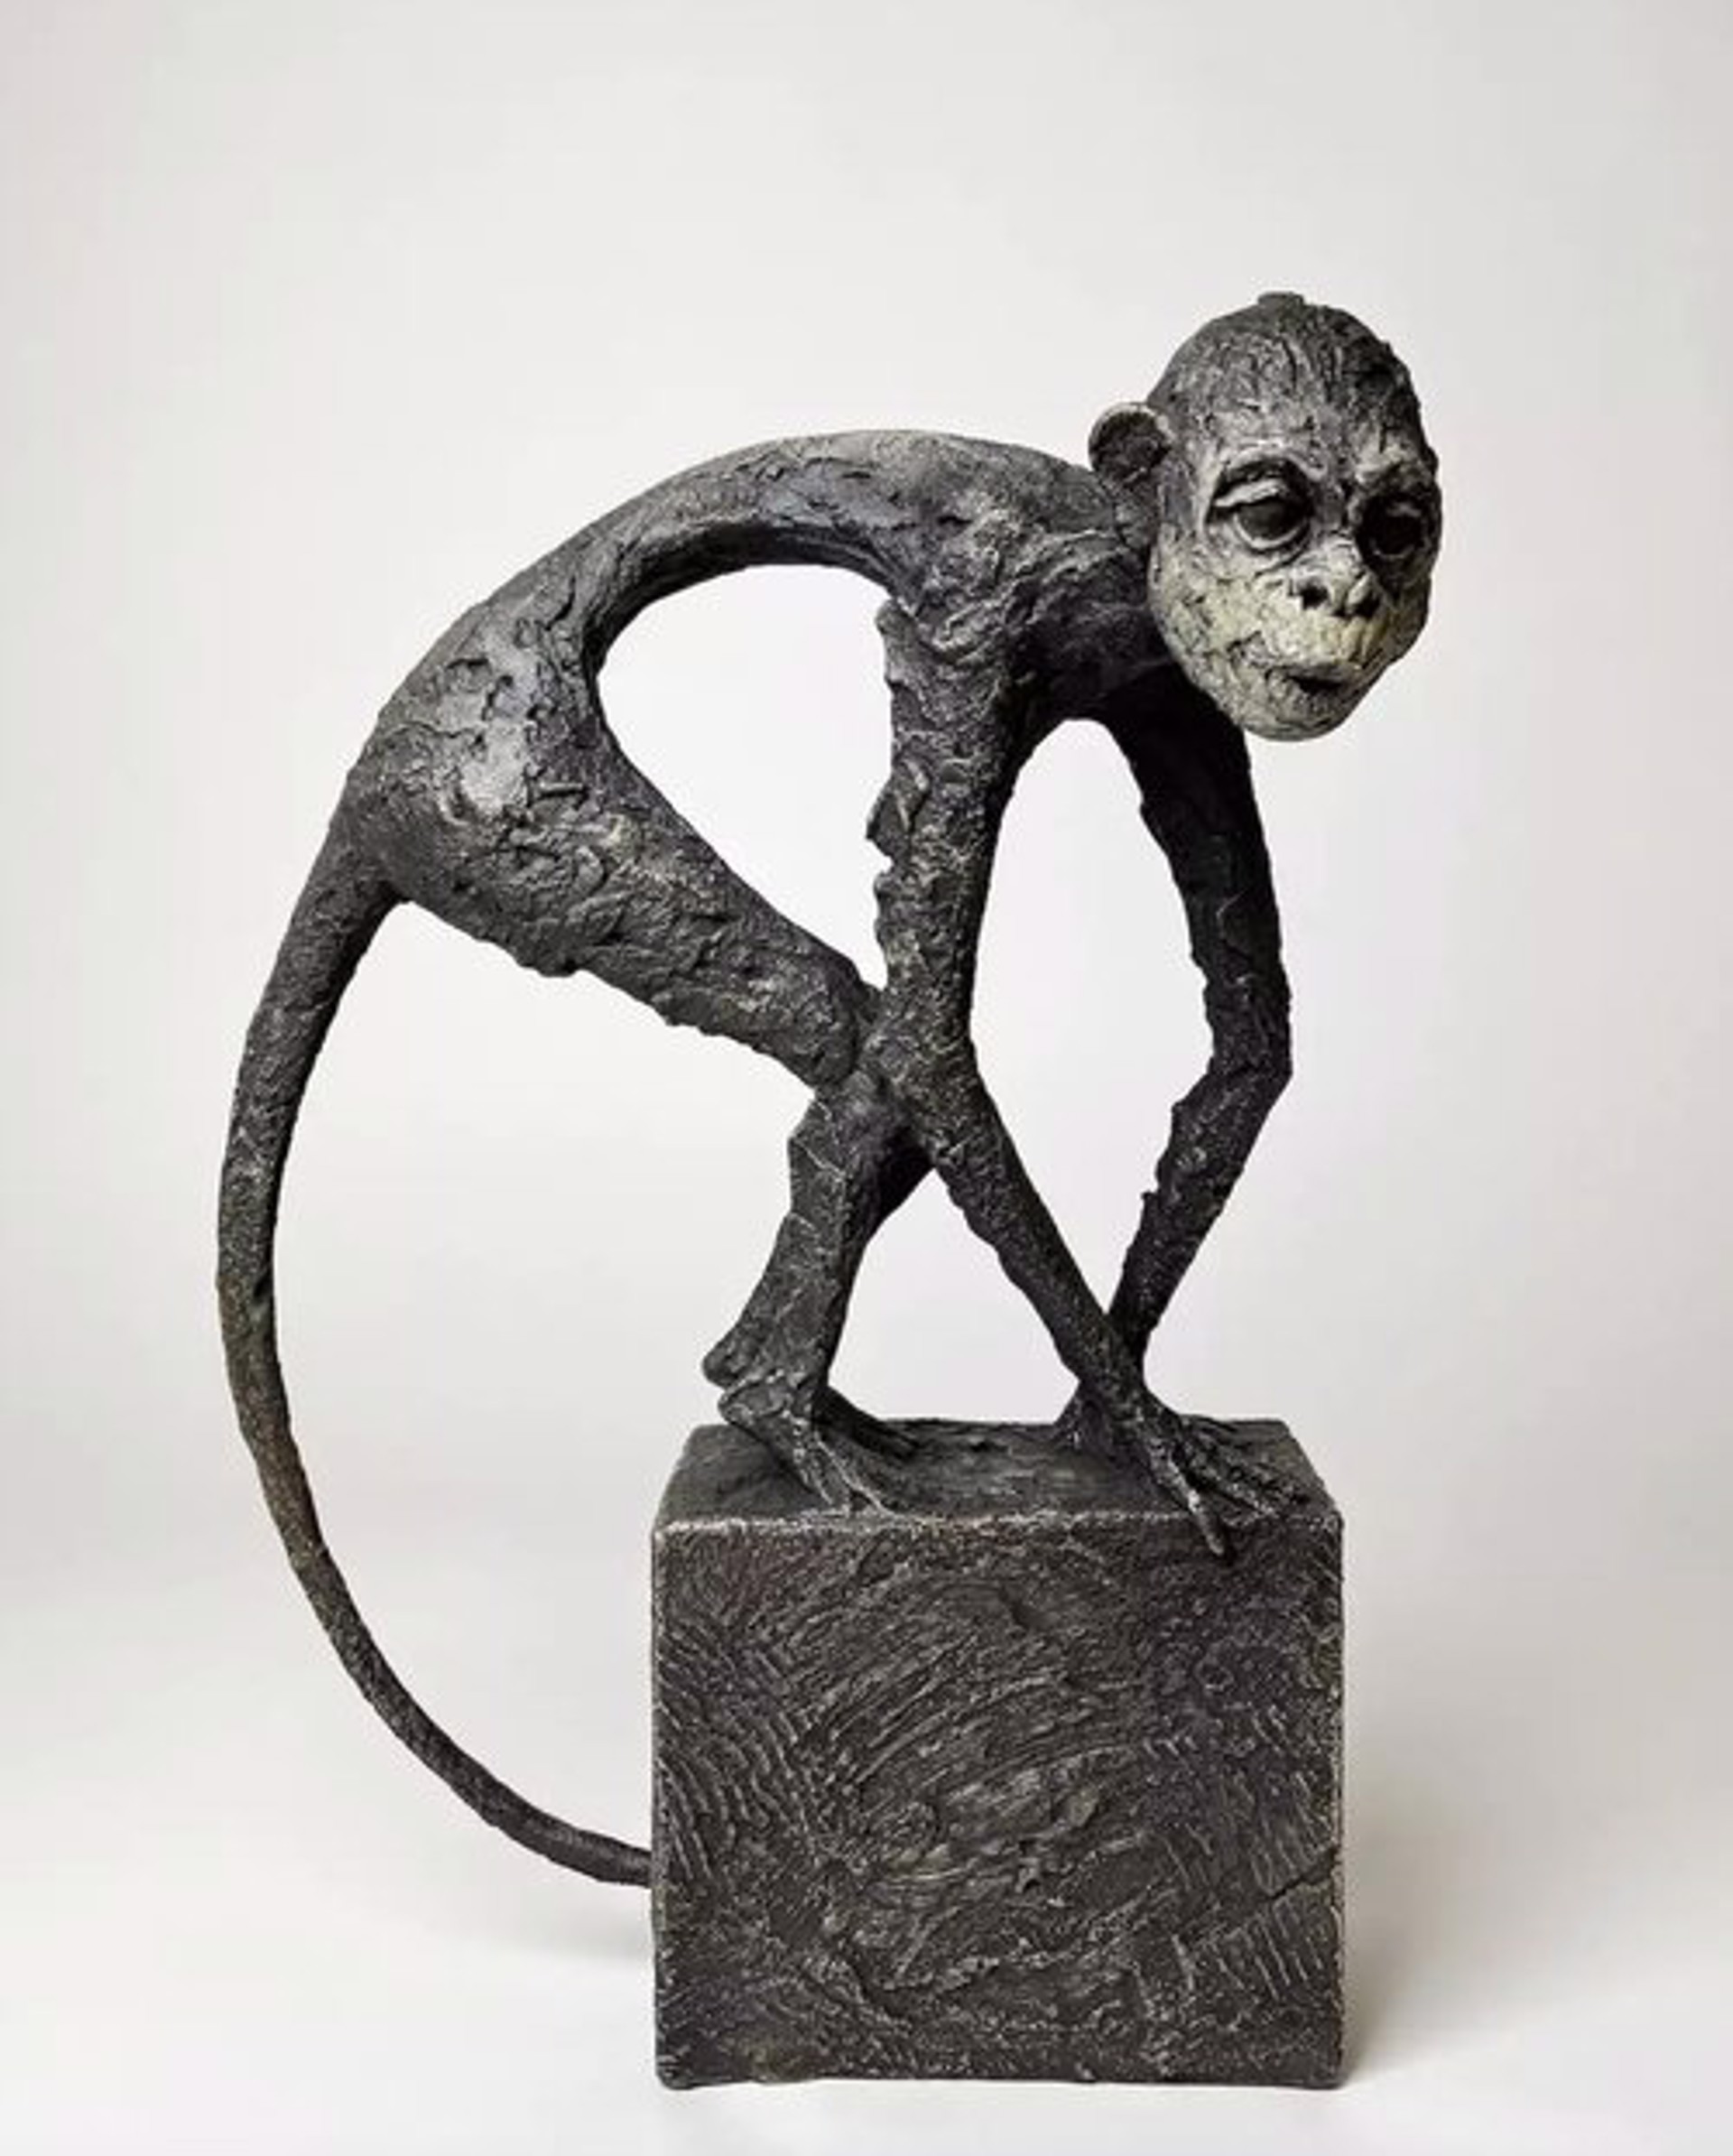 Monkey by Gustavo Torres